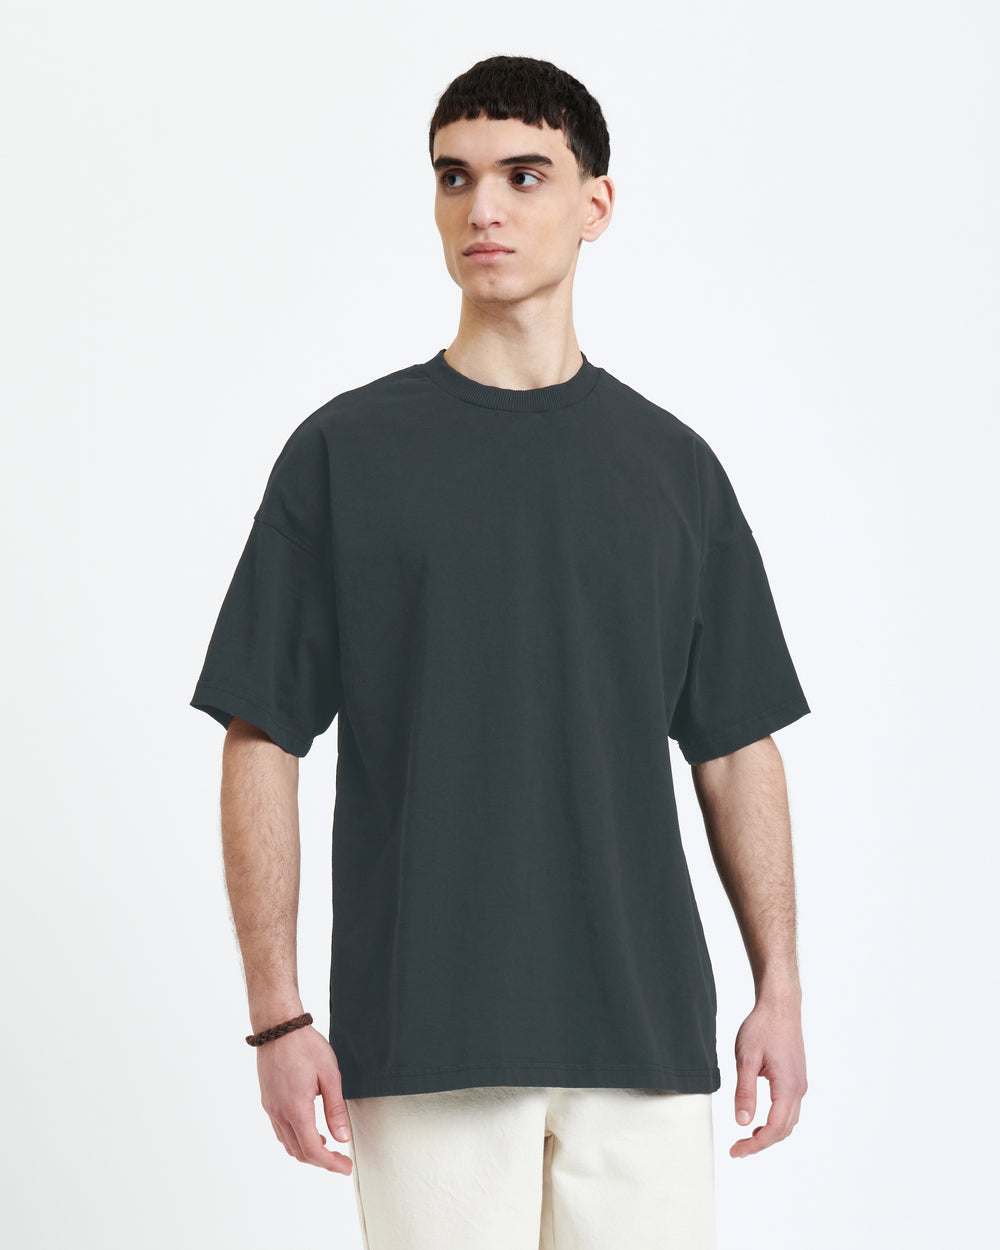 New Optimist menswear Spiaggia | Relaxed T-shirt Go Optimism backprint T-shirt